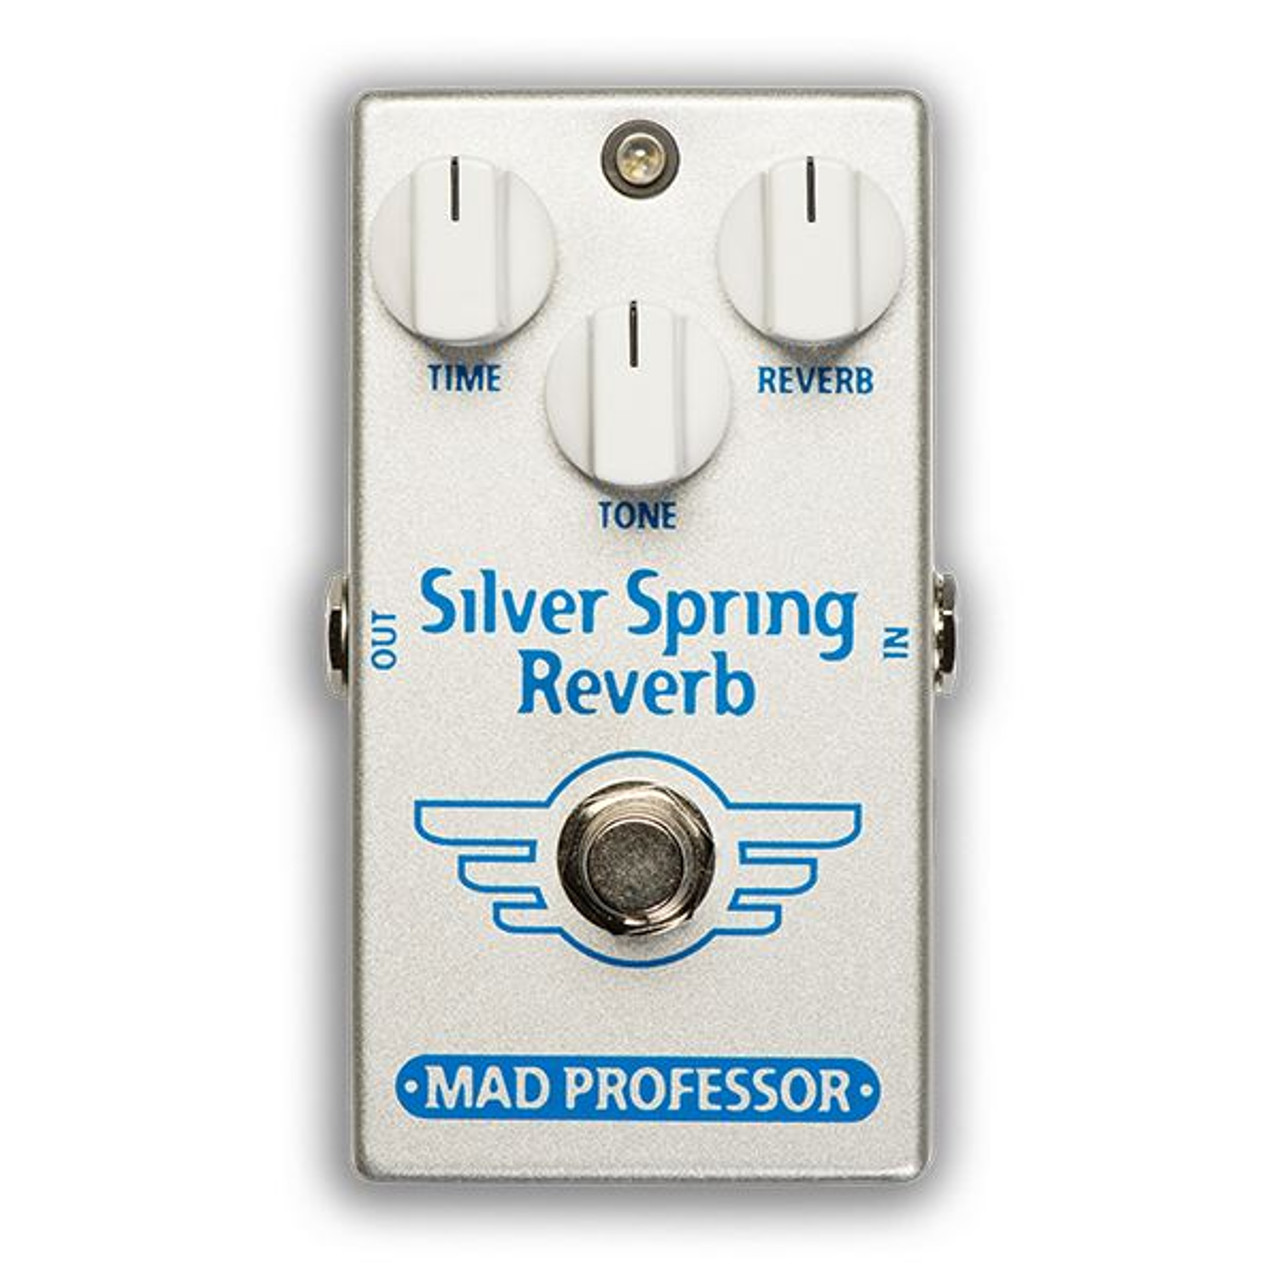 Mad Professor Silver Spring Reverb pedal